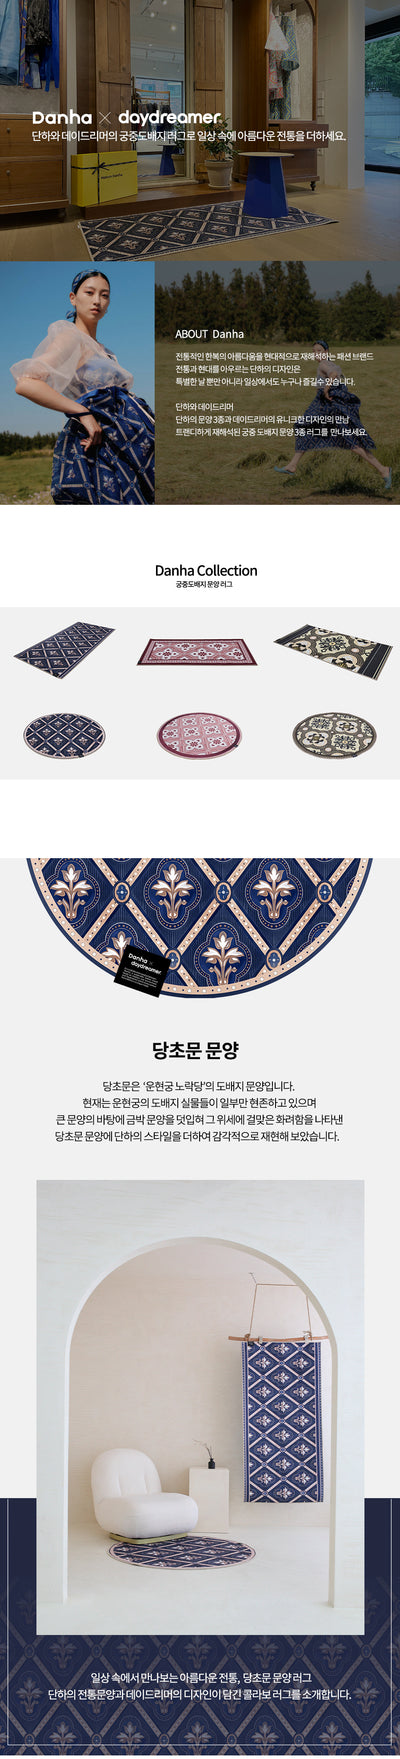 [daydreamer×Danha] arabesque pattern wallpaper circular rug